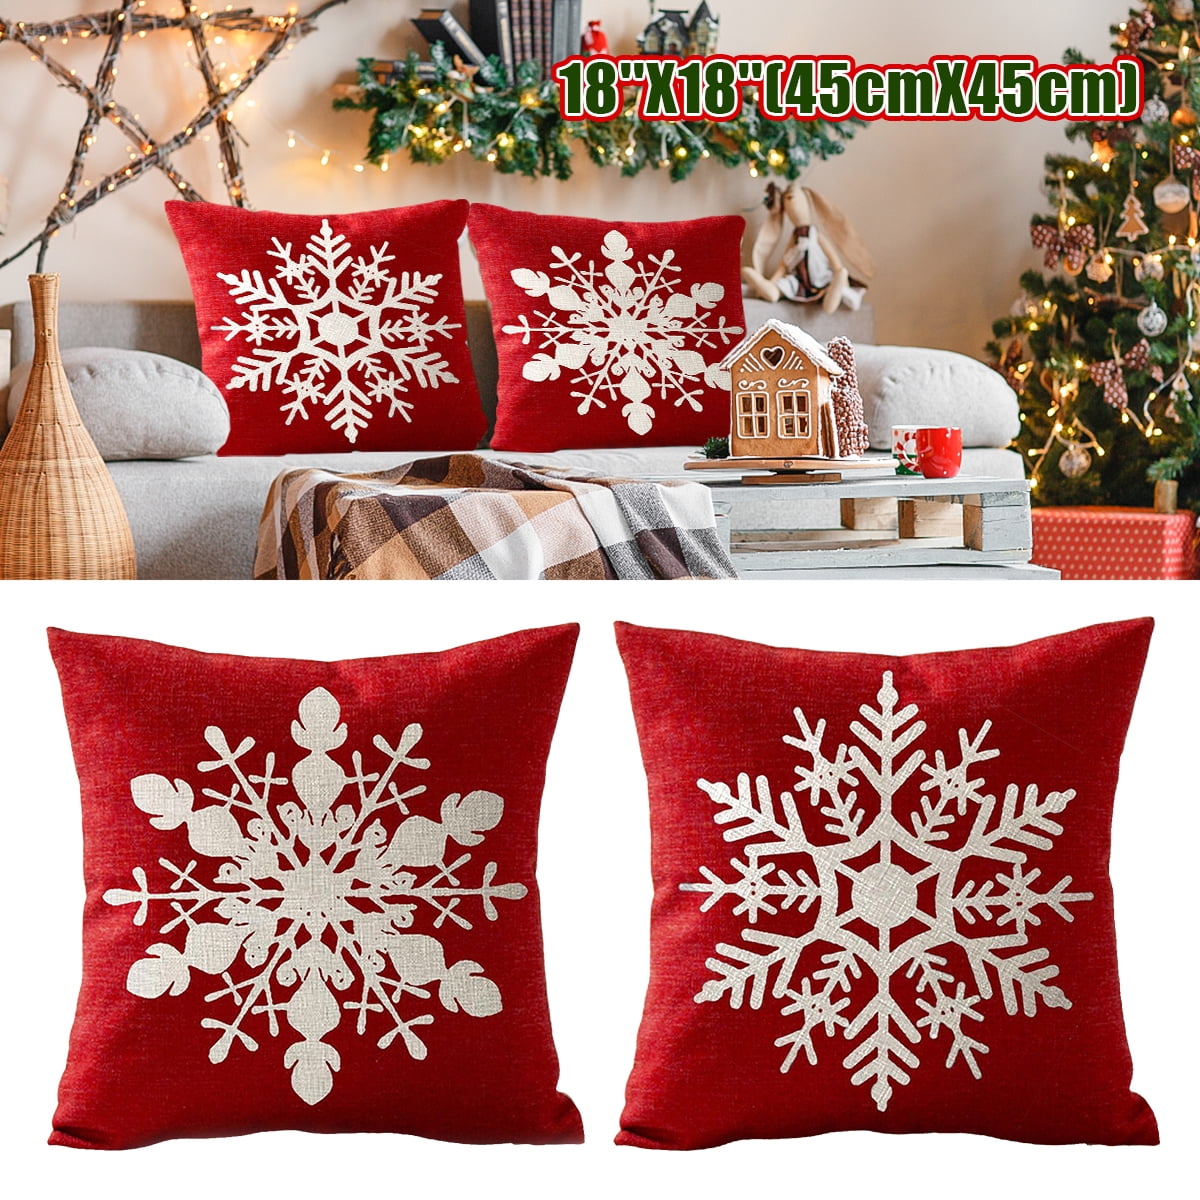 red yoga Retro Polyester pillows case sofa car waist cushion cover Home Decor 